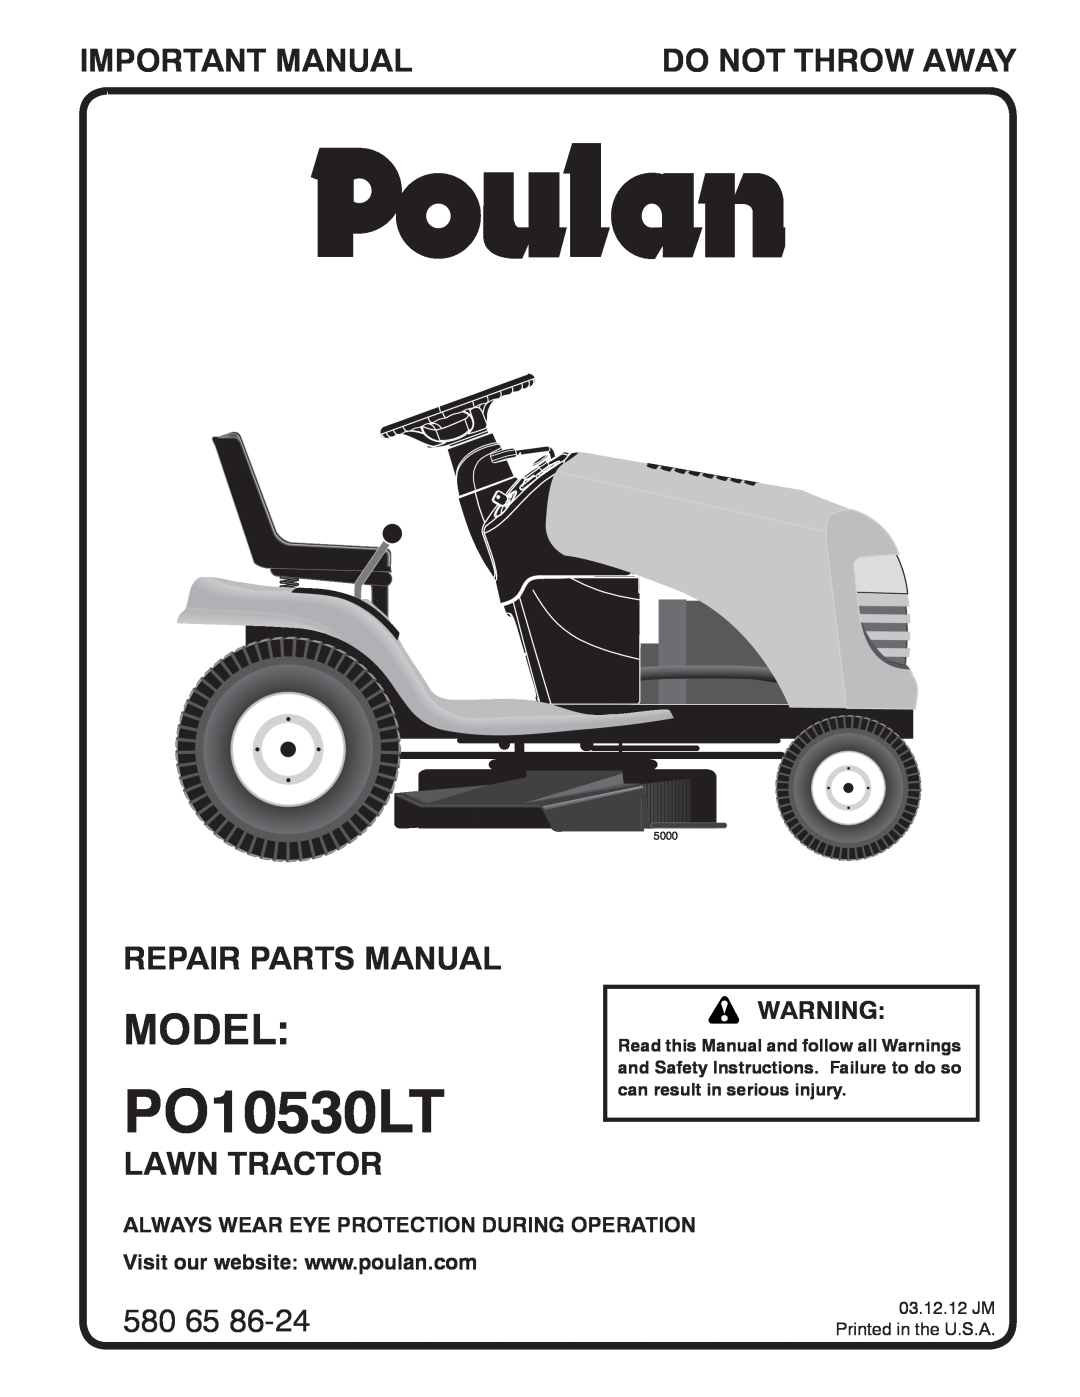 Poulan PO10530LT manual Model, Important Manual, Do Not Throw Away, Repair Parts Manual, Lawn Tractor, 580, 5000 